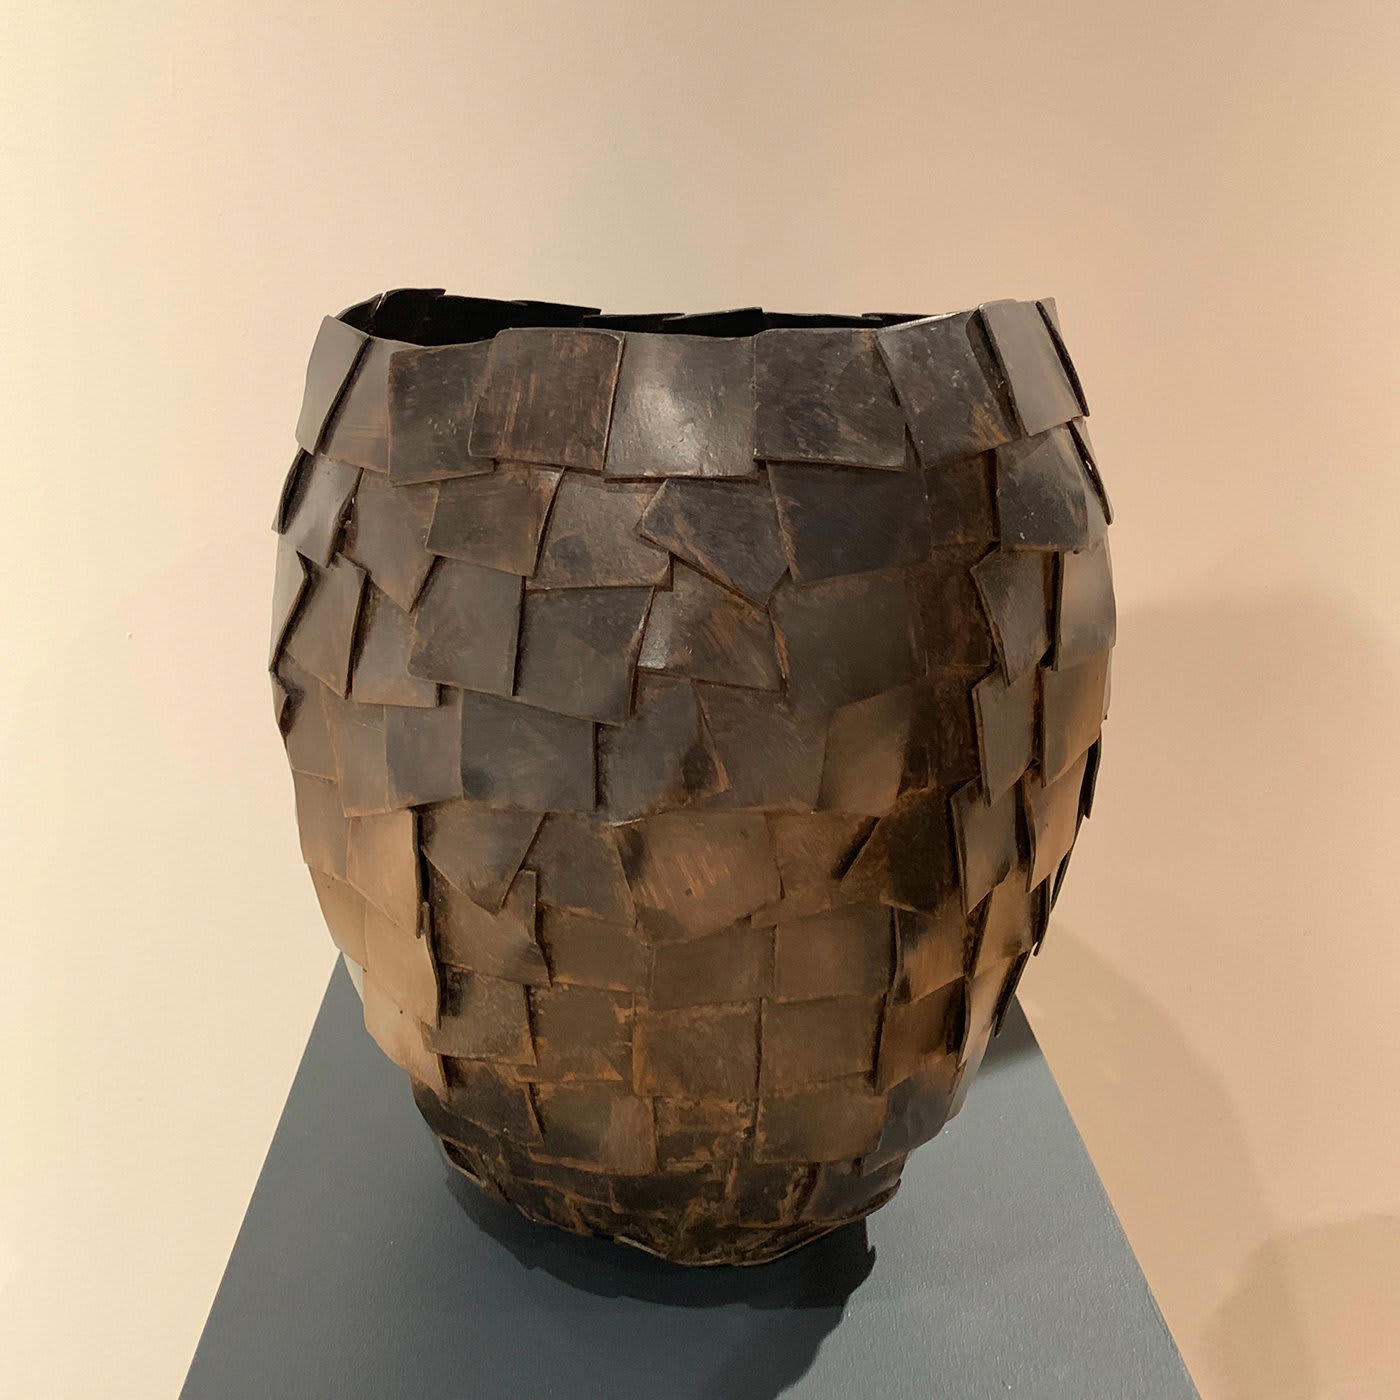 Cuoio Vase #1 - Antonino Sciortino